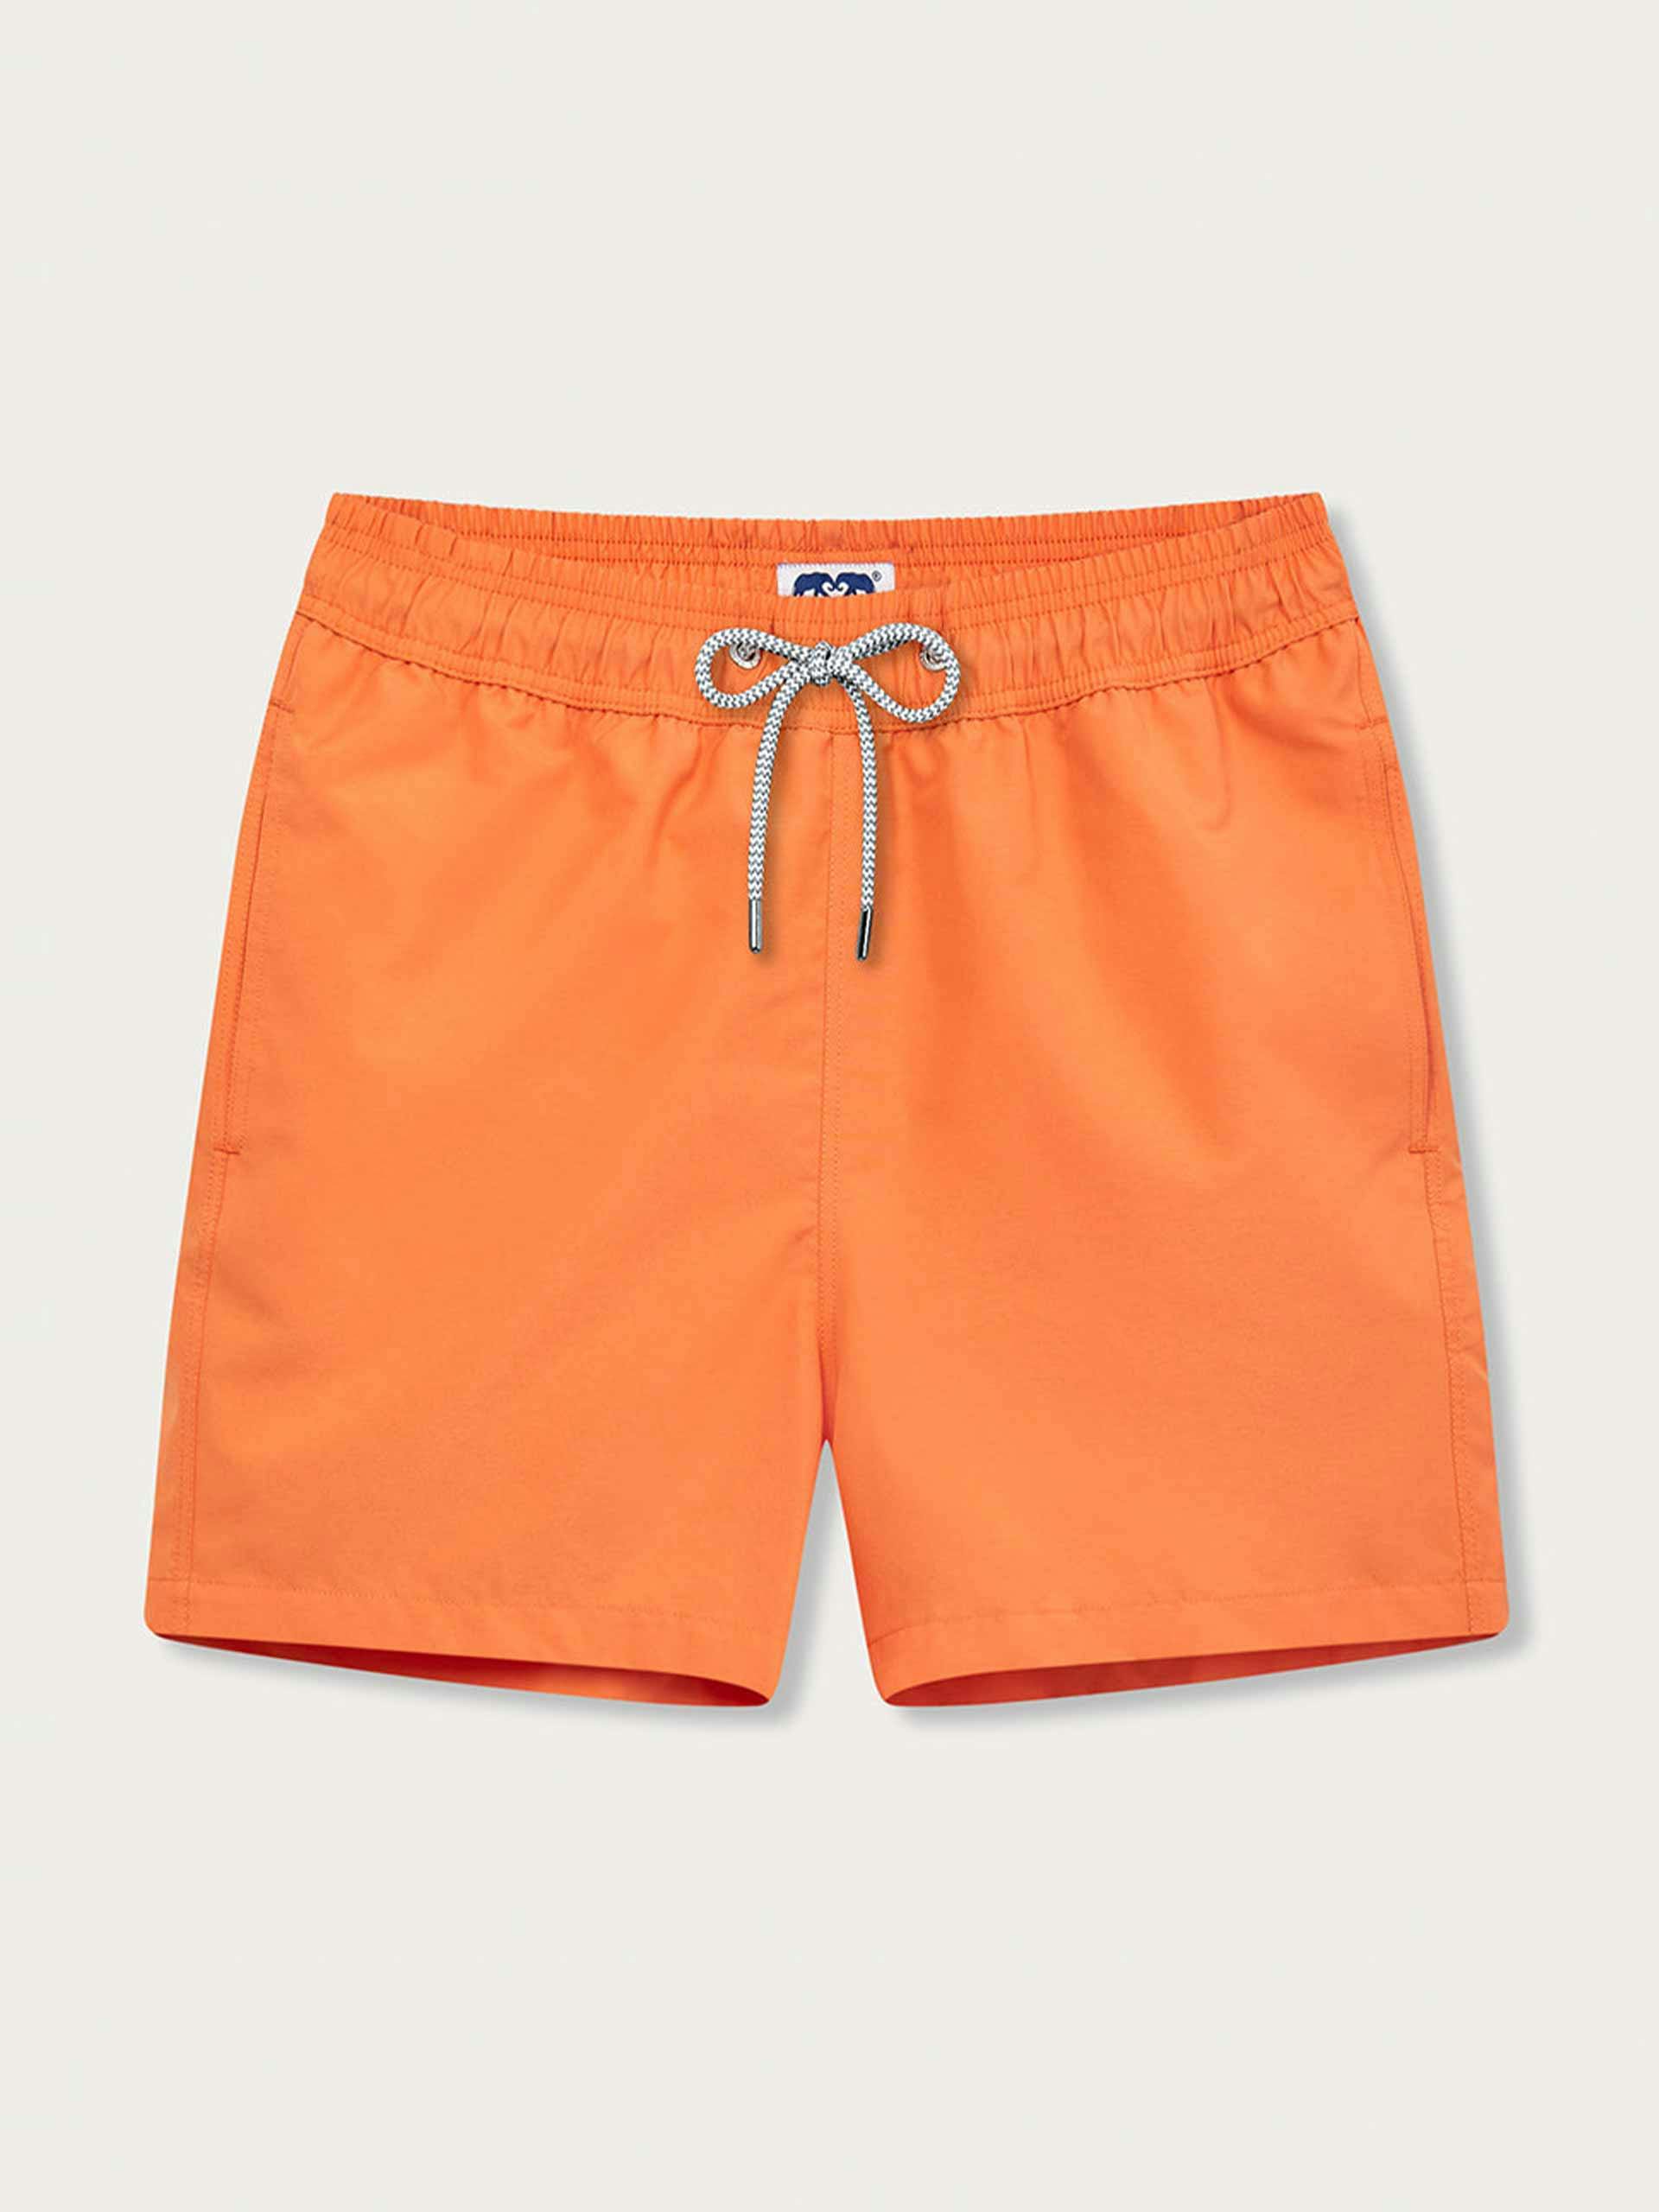 Tangerine swim shorts